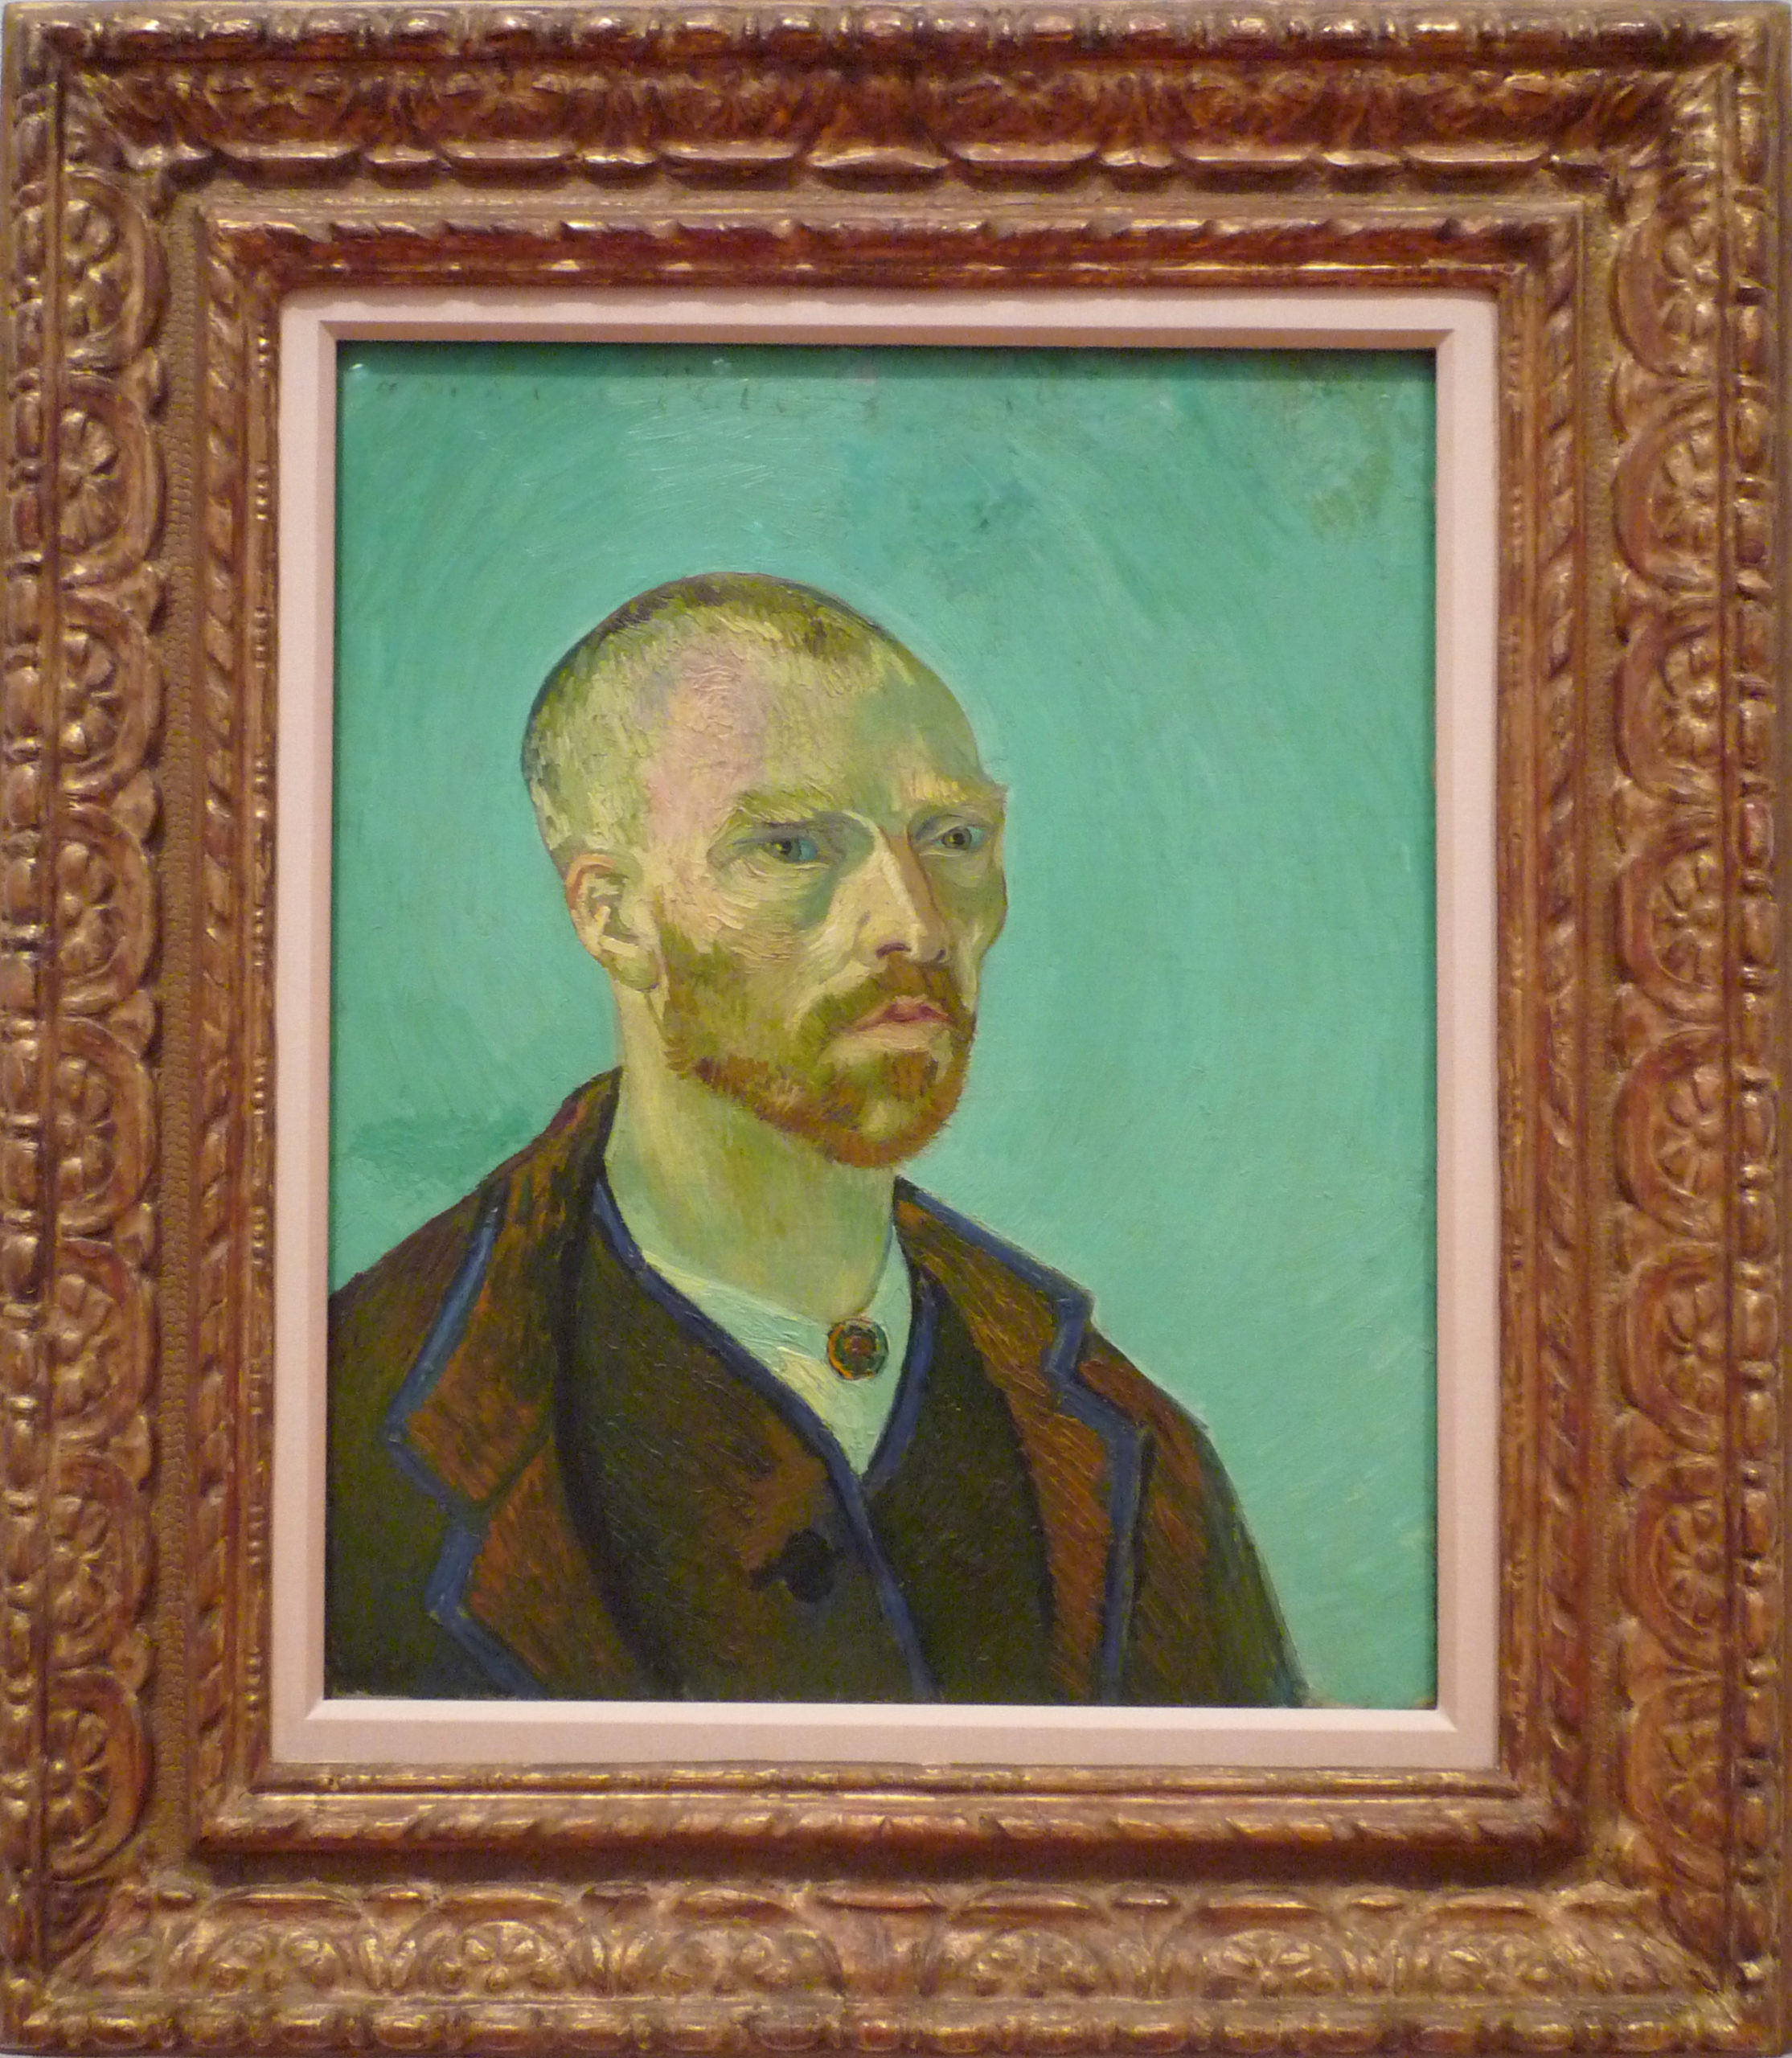 Vincent van Gogh, Self-Portrait Dedicated to Paul Gauguin, 1888, oil on canvas, 24 x 19-11/16 inches (Fogg, Harvard Art Museums)